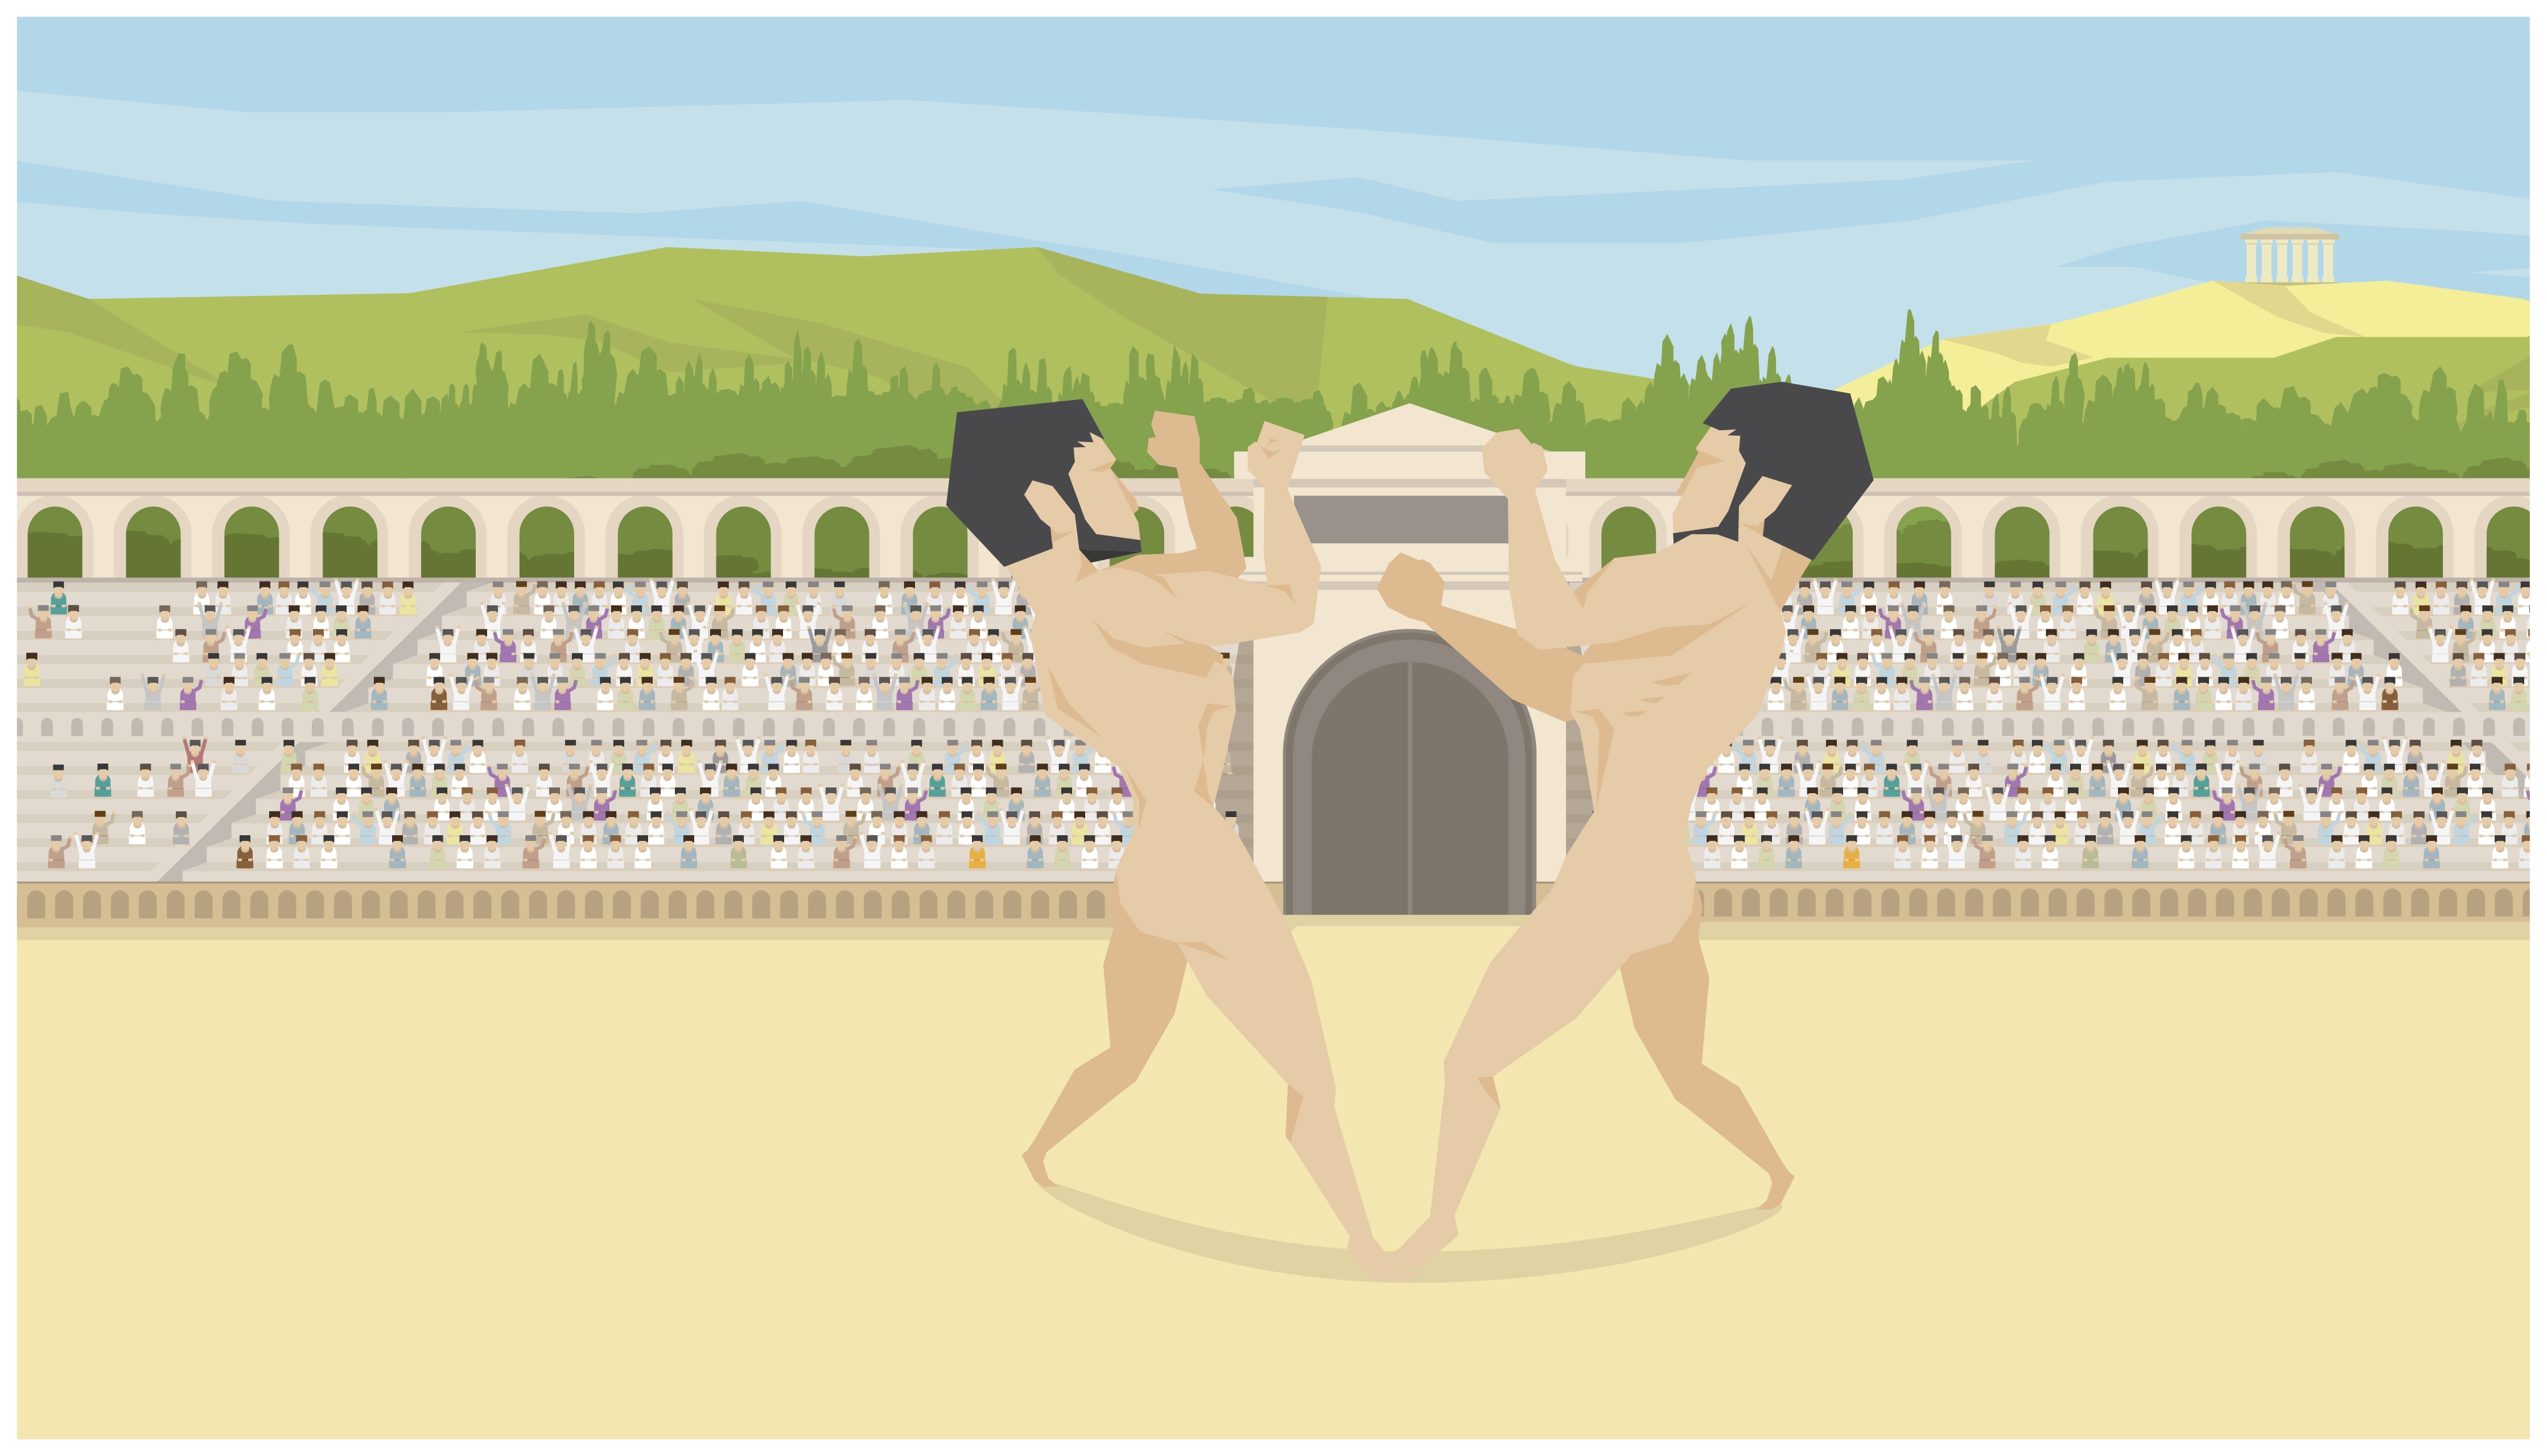 ancient olympics wrestling